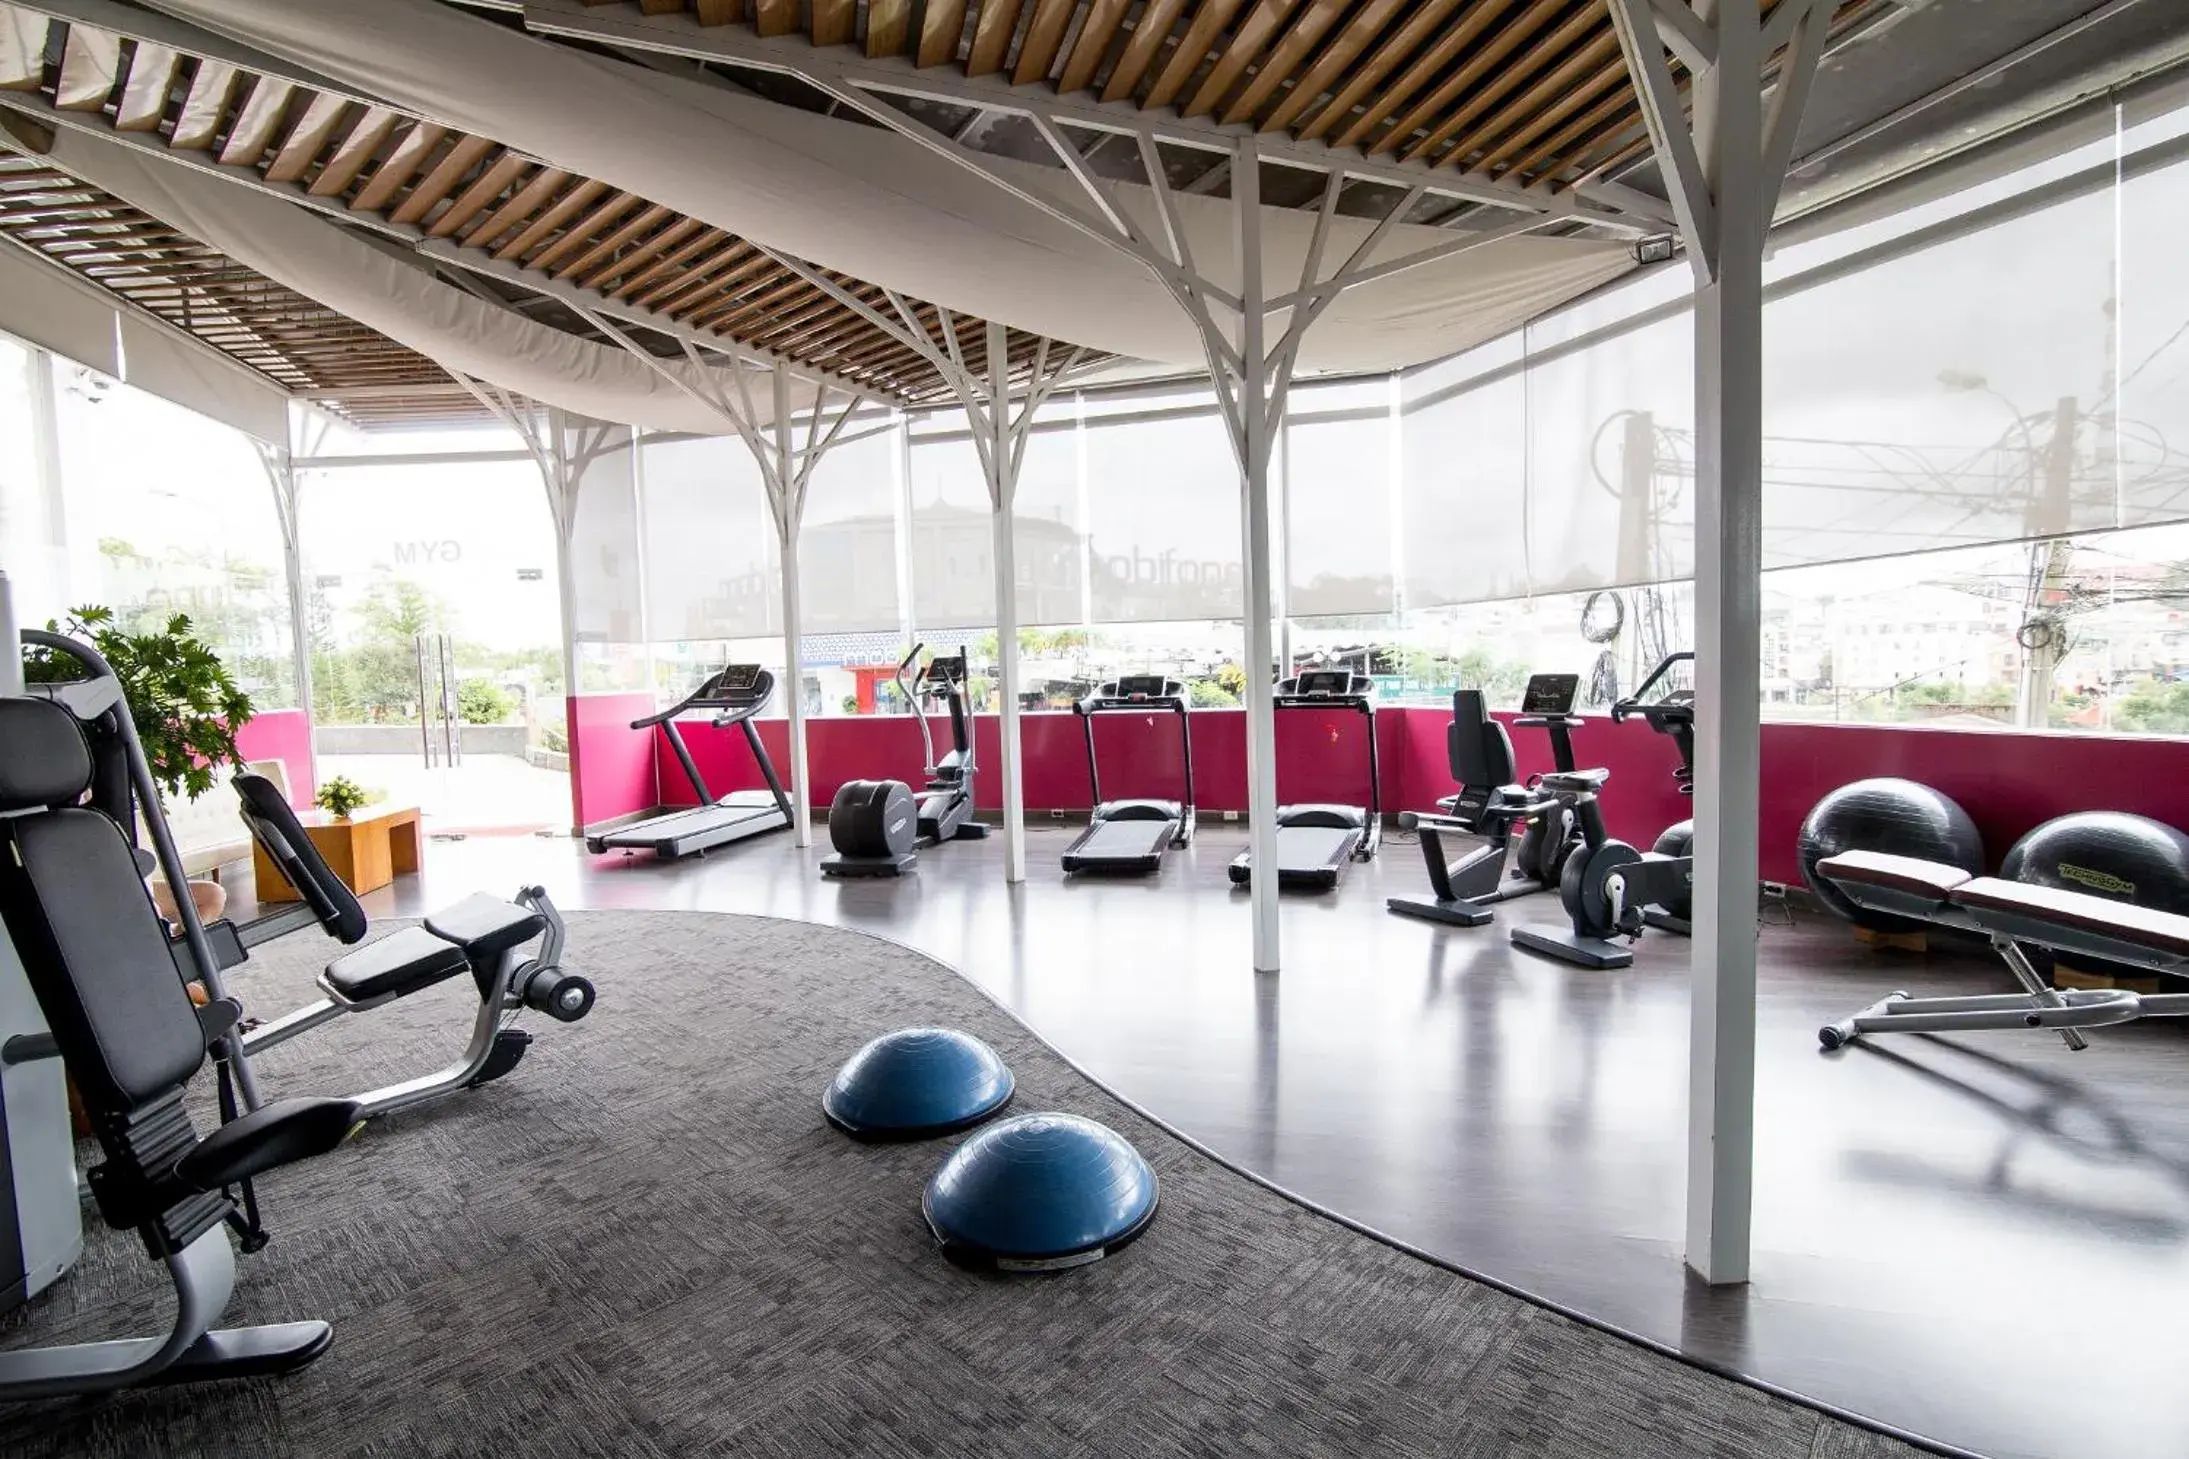 Fitness centre/facilities, Fitness Center/Facilities in TTC Hotel - Ngoc Lan